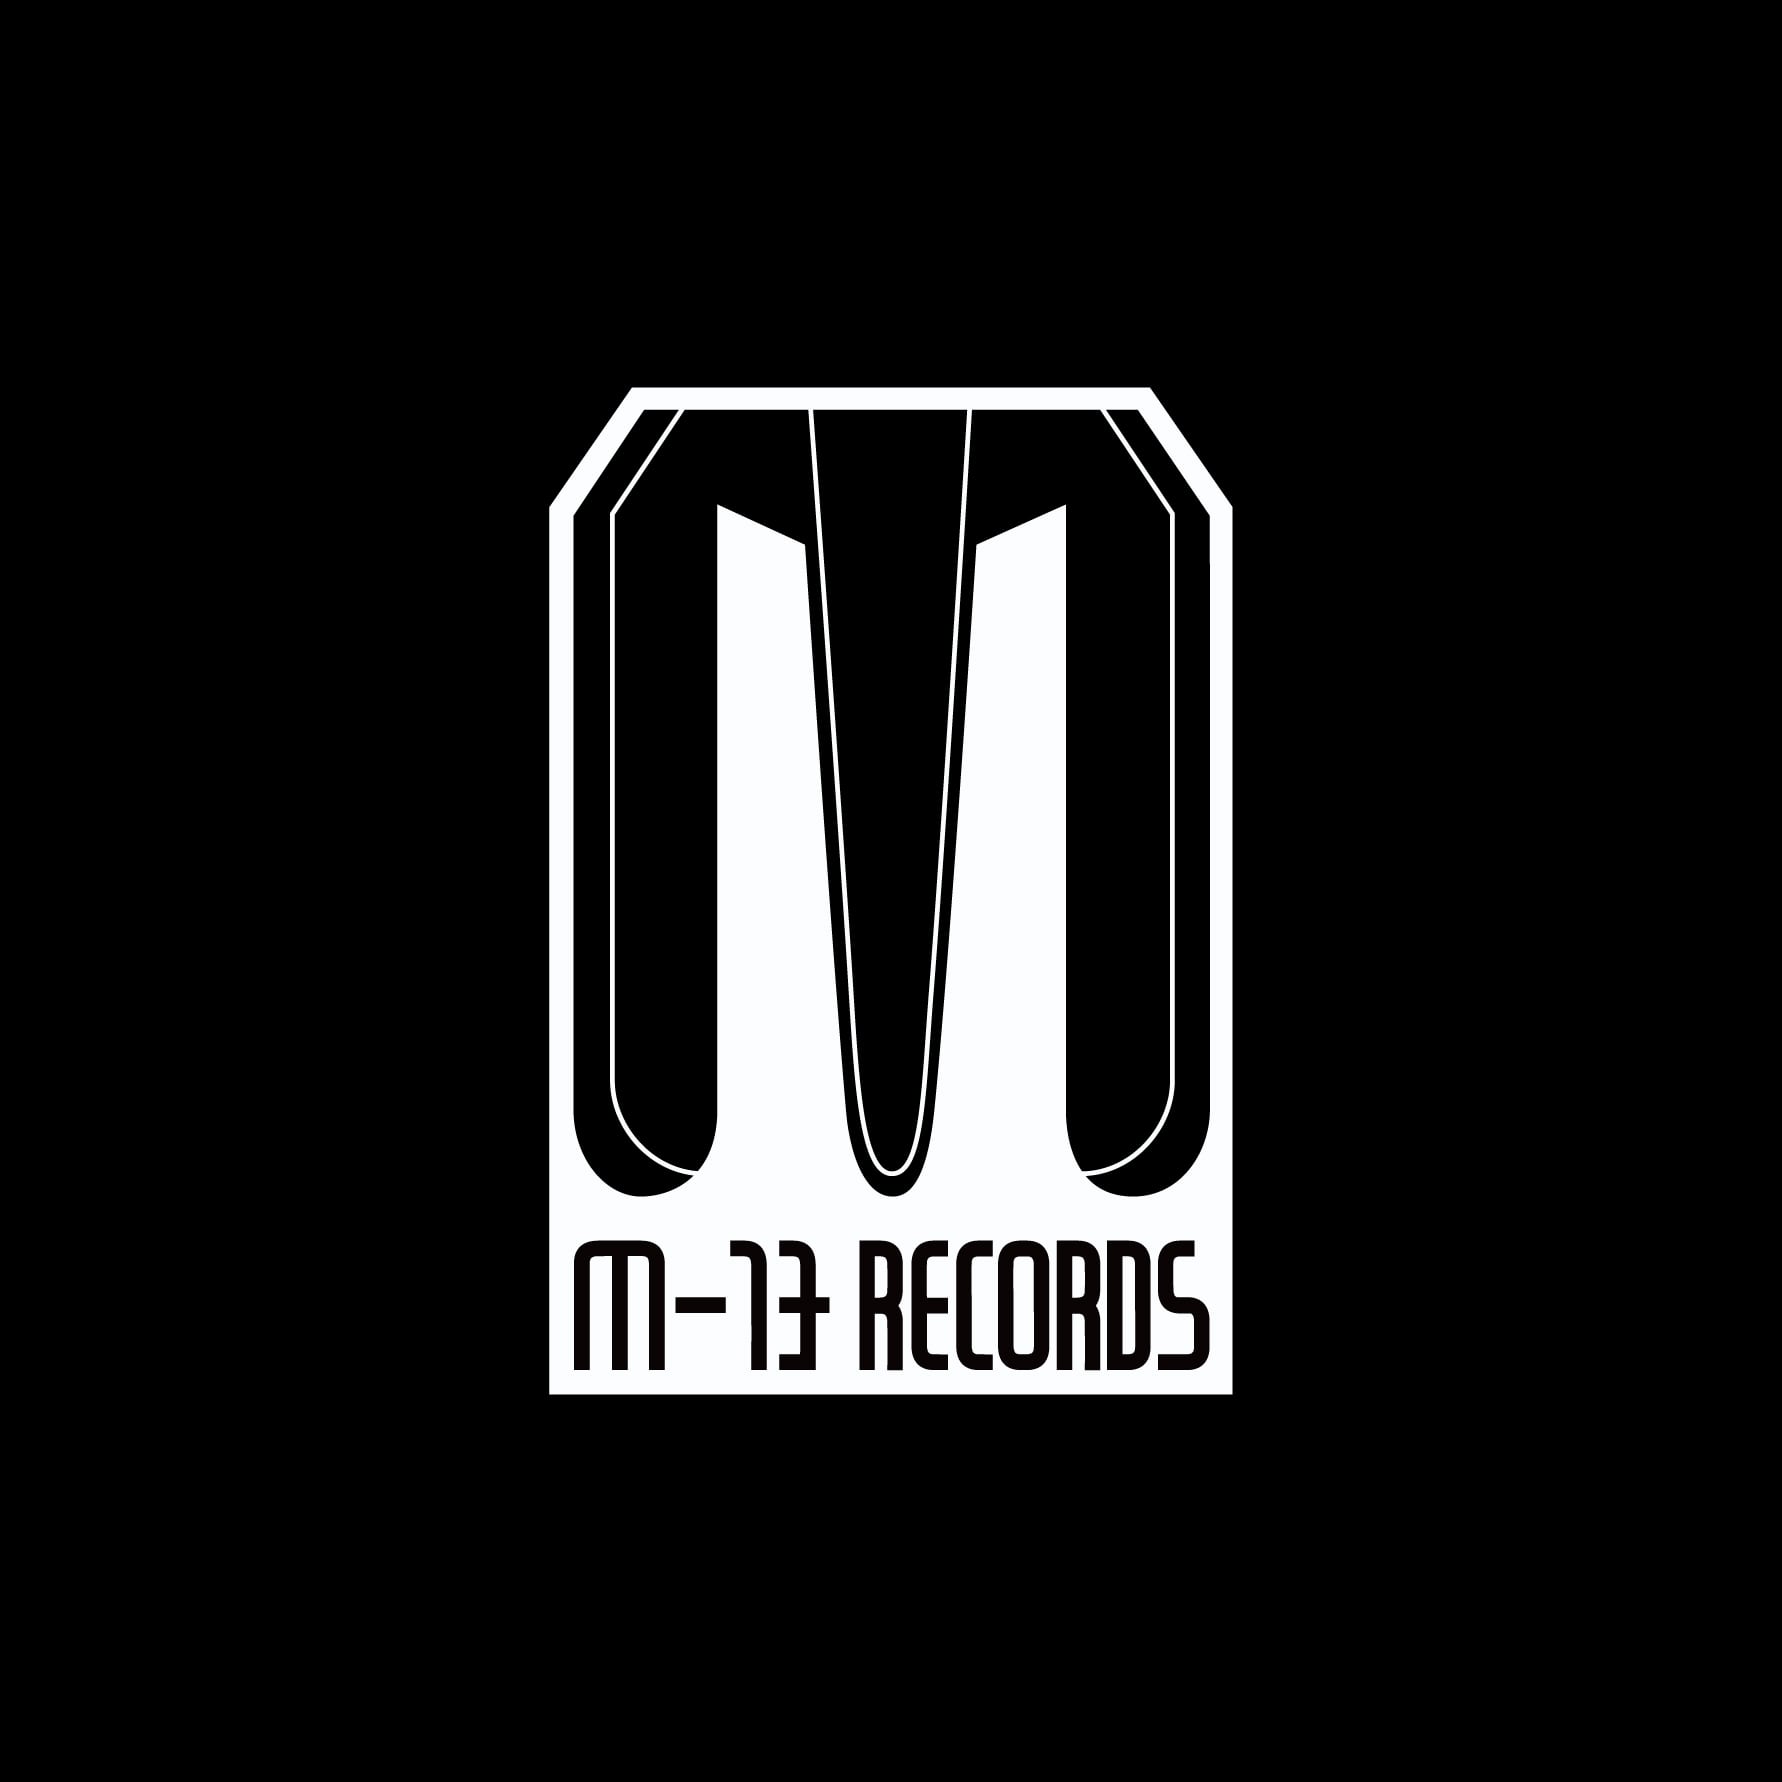 M-13 RECORDS